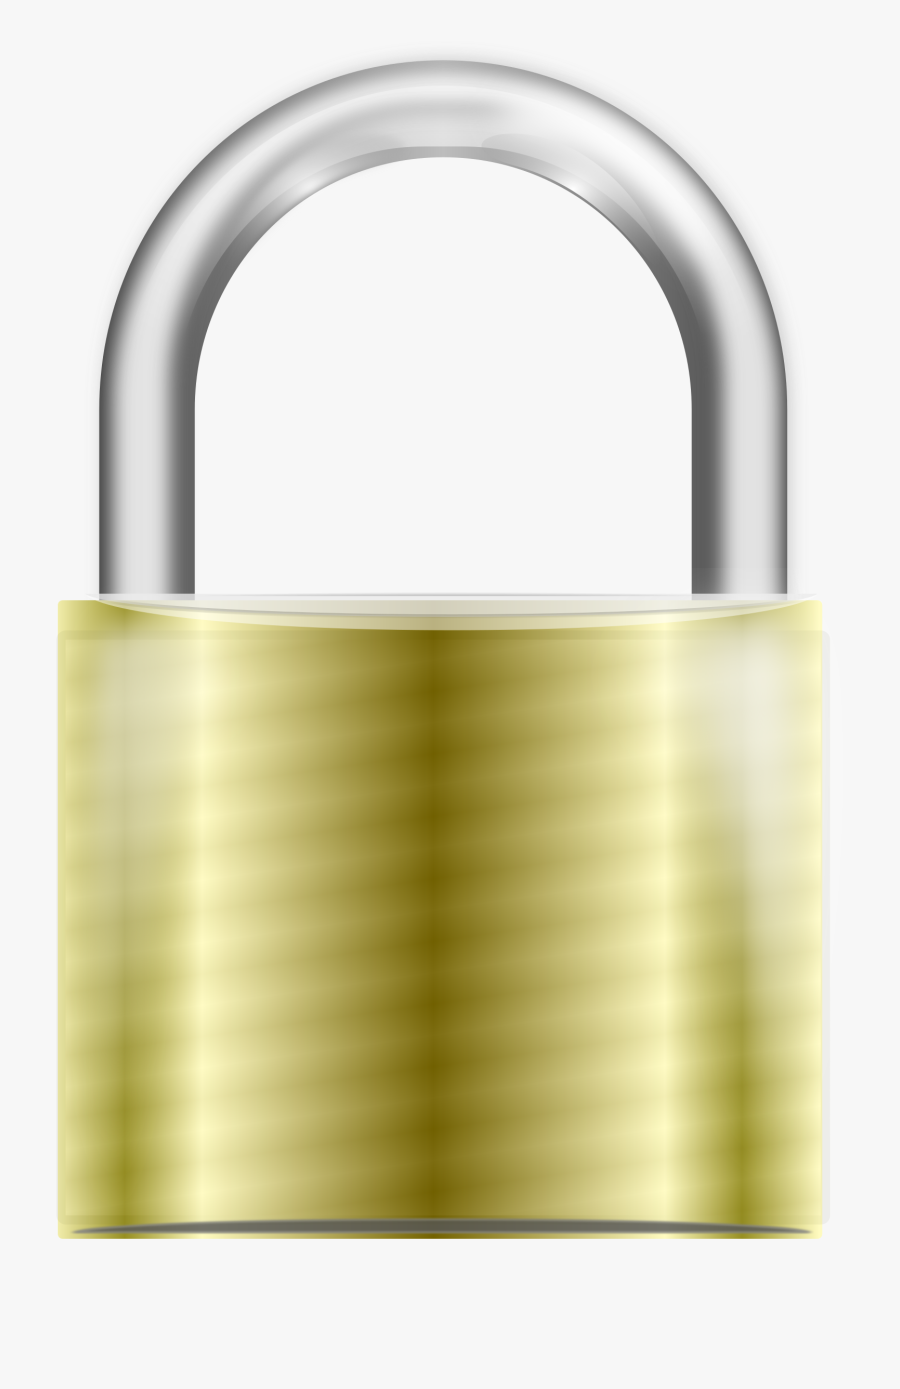 Cool Lock In Clip Art Medium Size - صوره قفل, Transparent Clipart